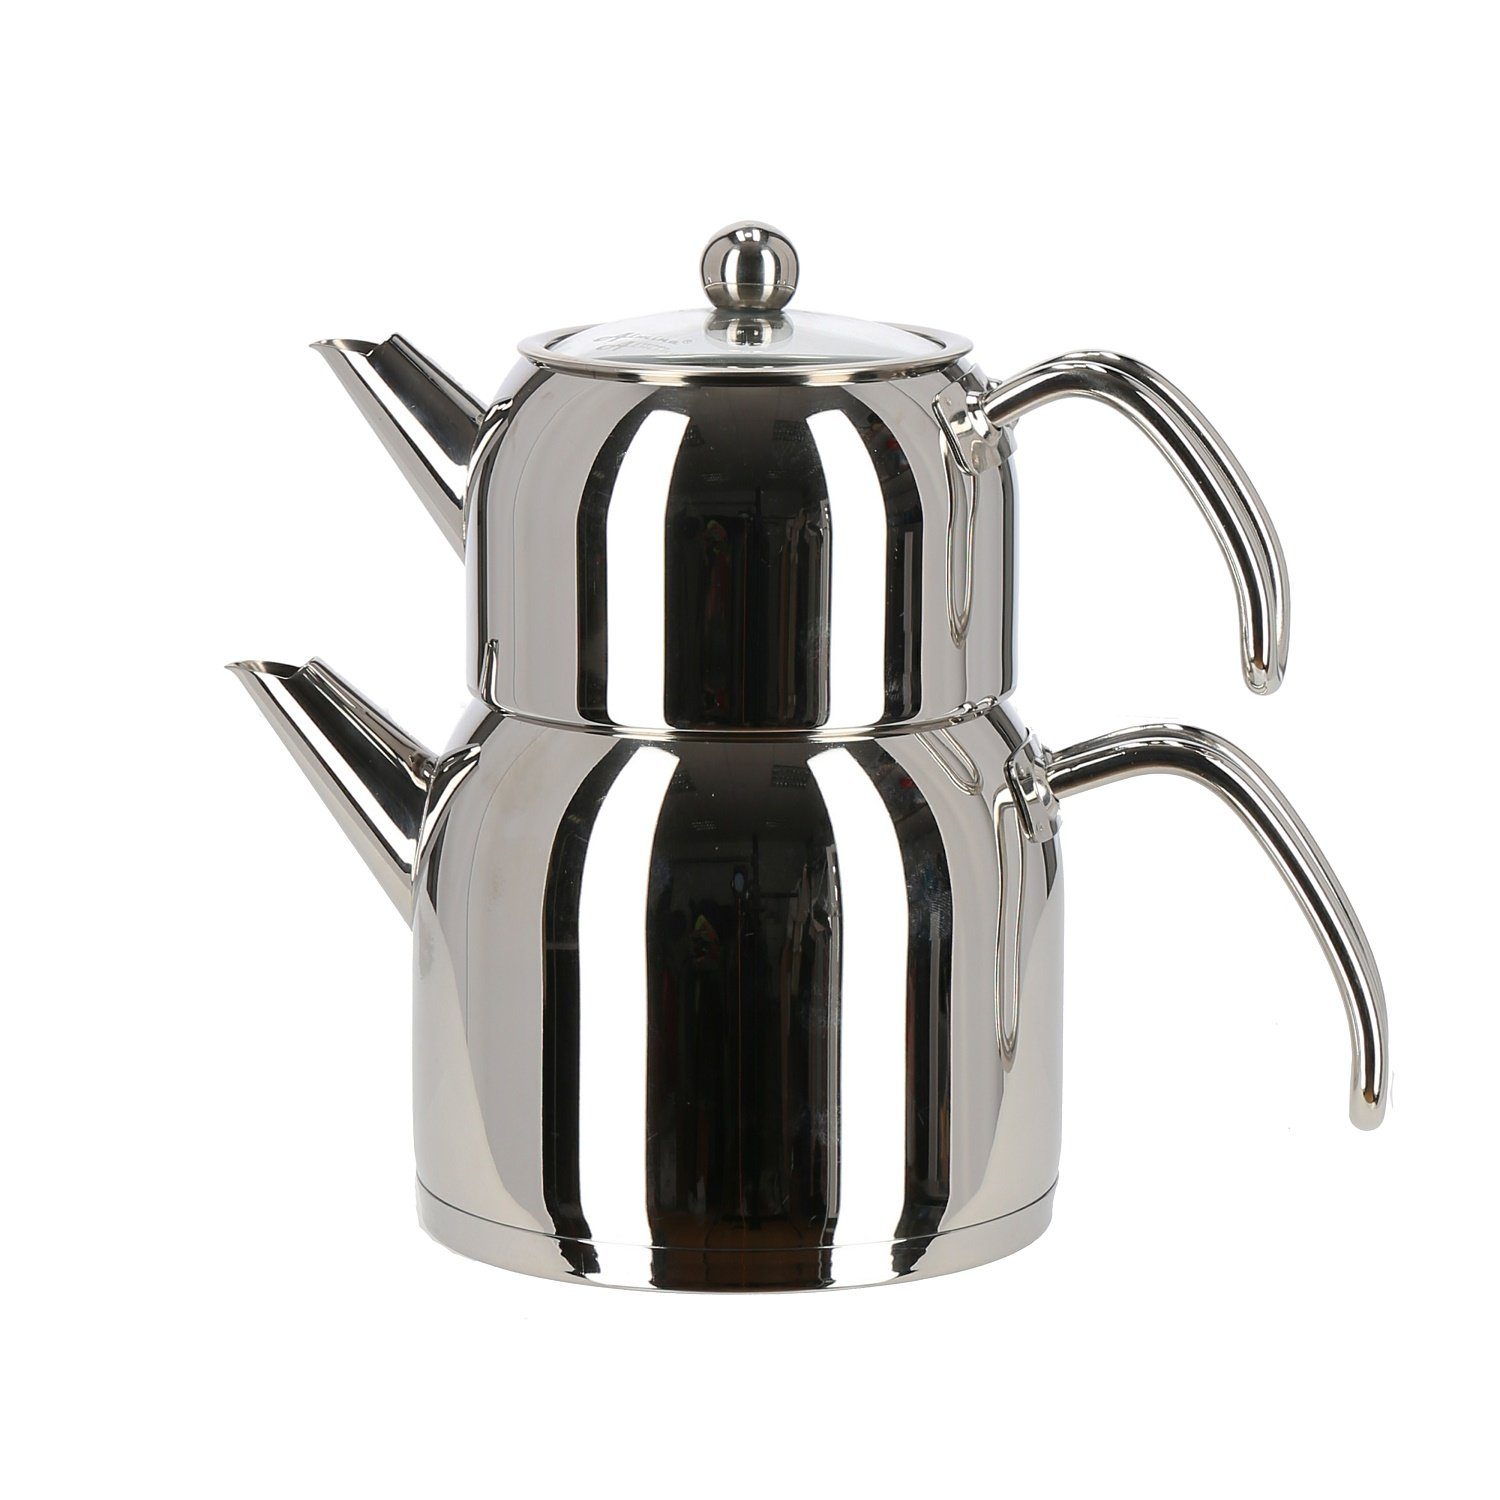 Almina Teekanne Edelstahl Teekocher Wasser/Tee-Kessel 3L, 1,5L Teekessel Wasserkessel